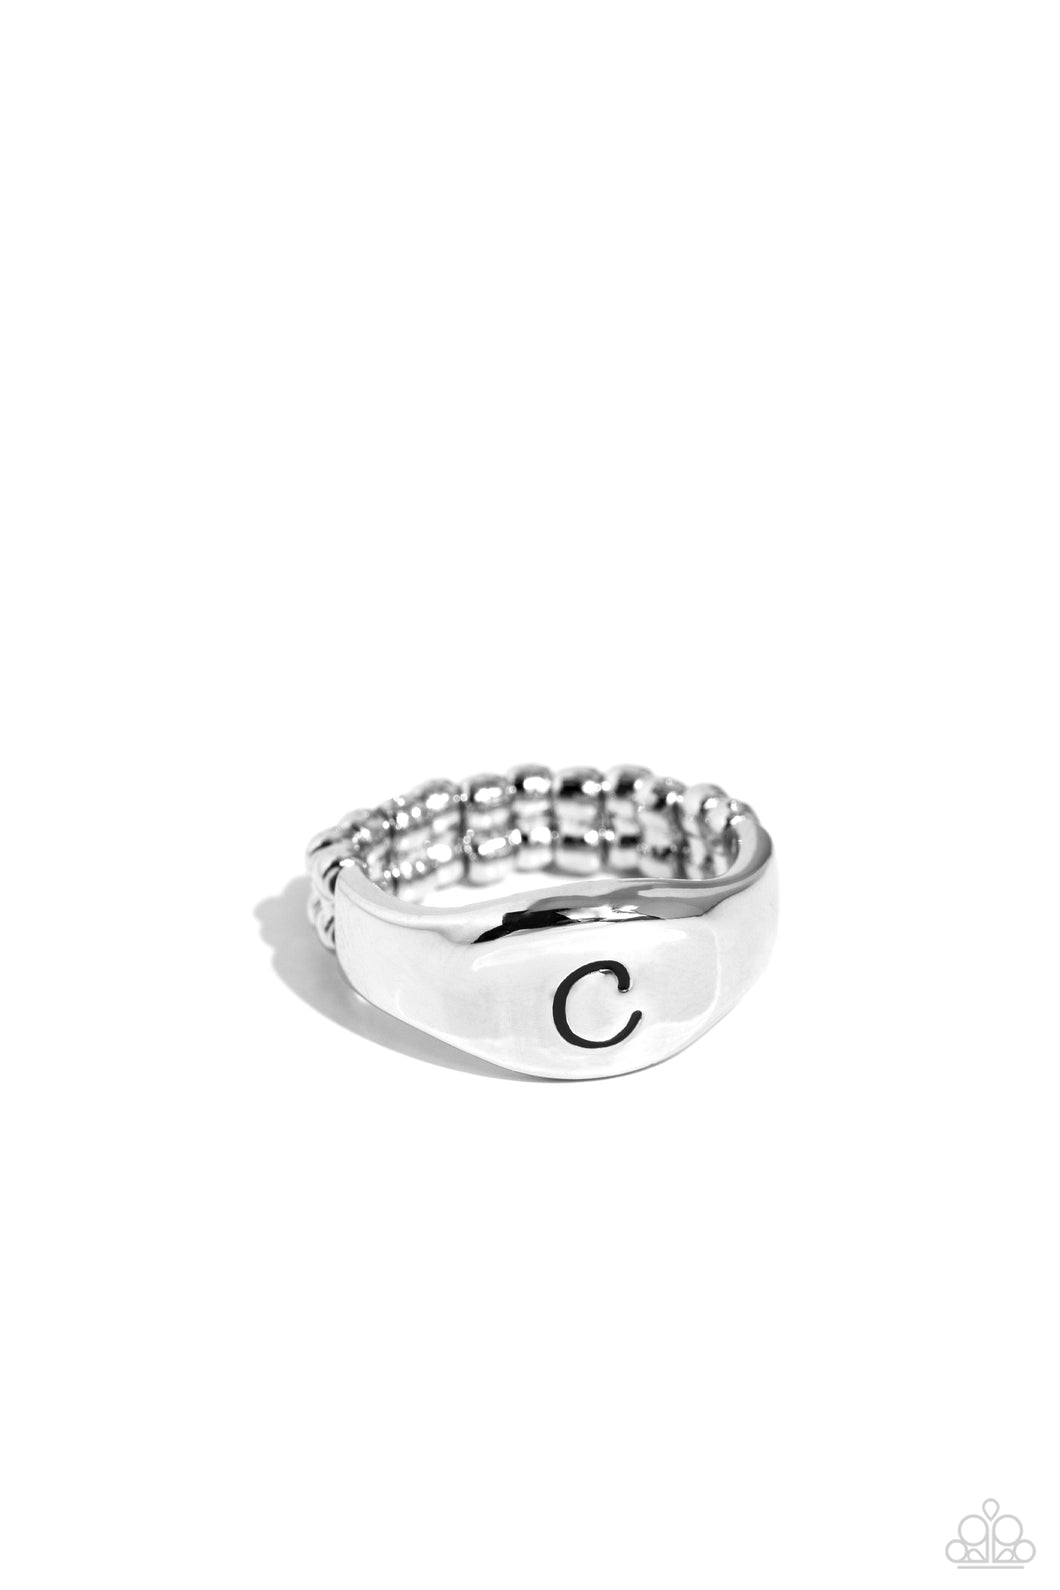 Monogram Memento - Silver - C Initial Ring